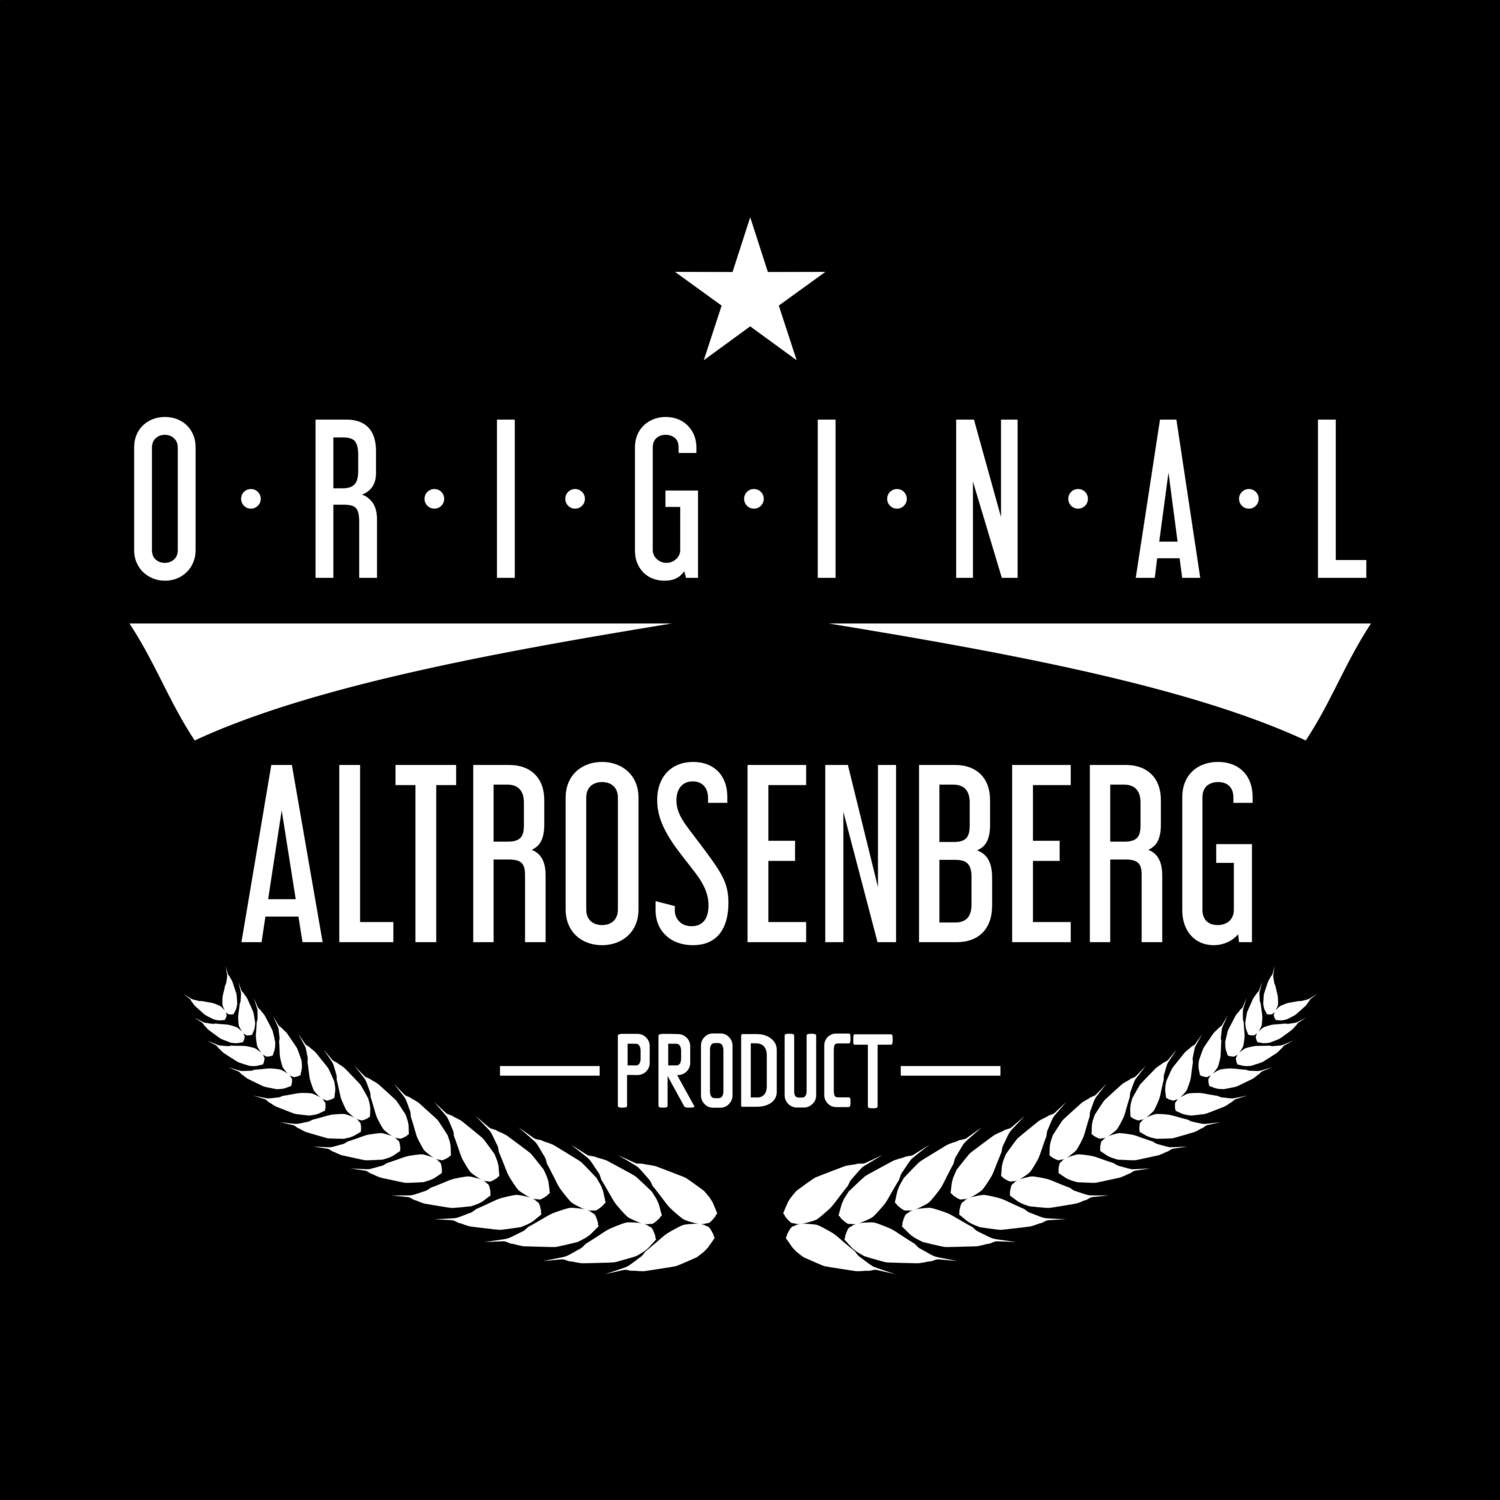 Altrosenberg T-Shirt »Original Product«